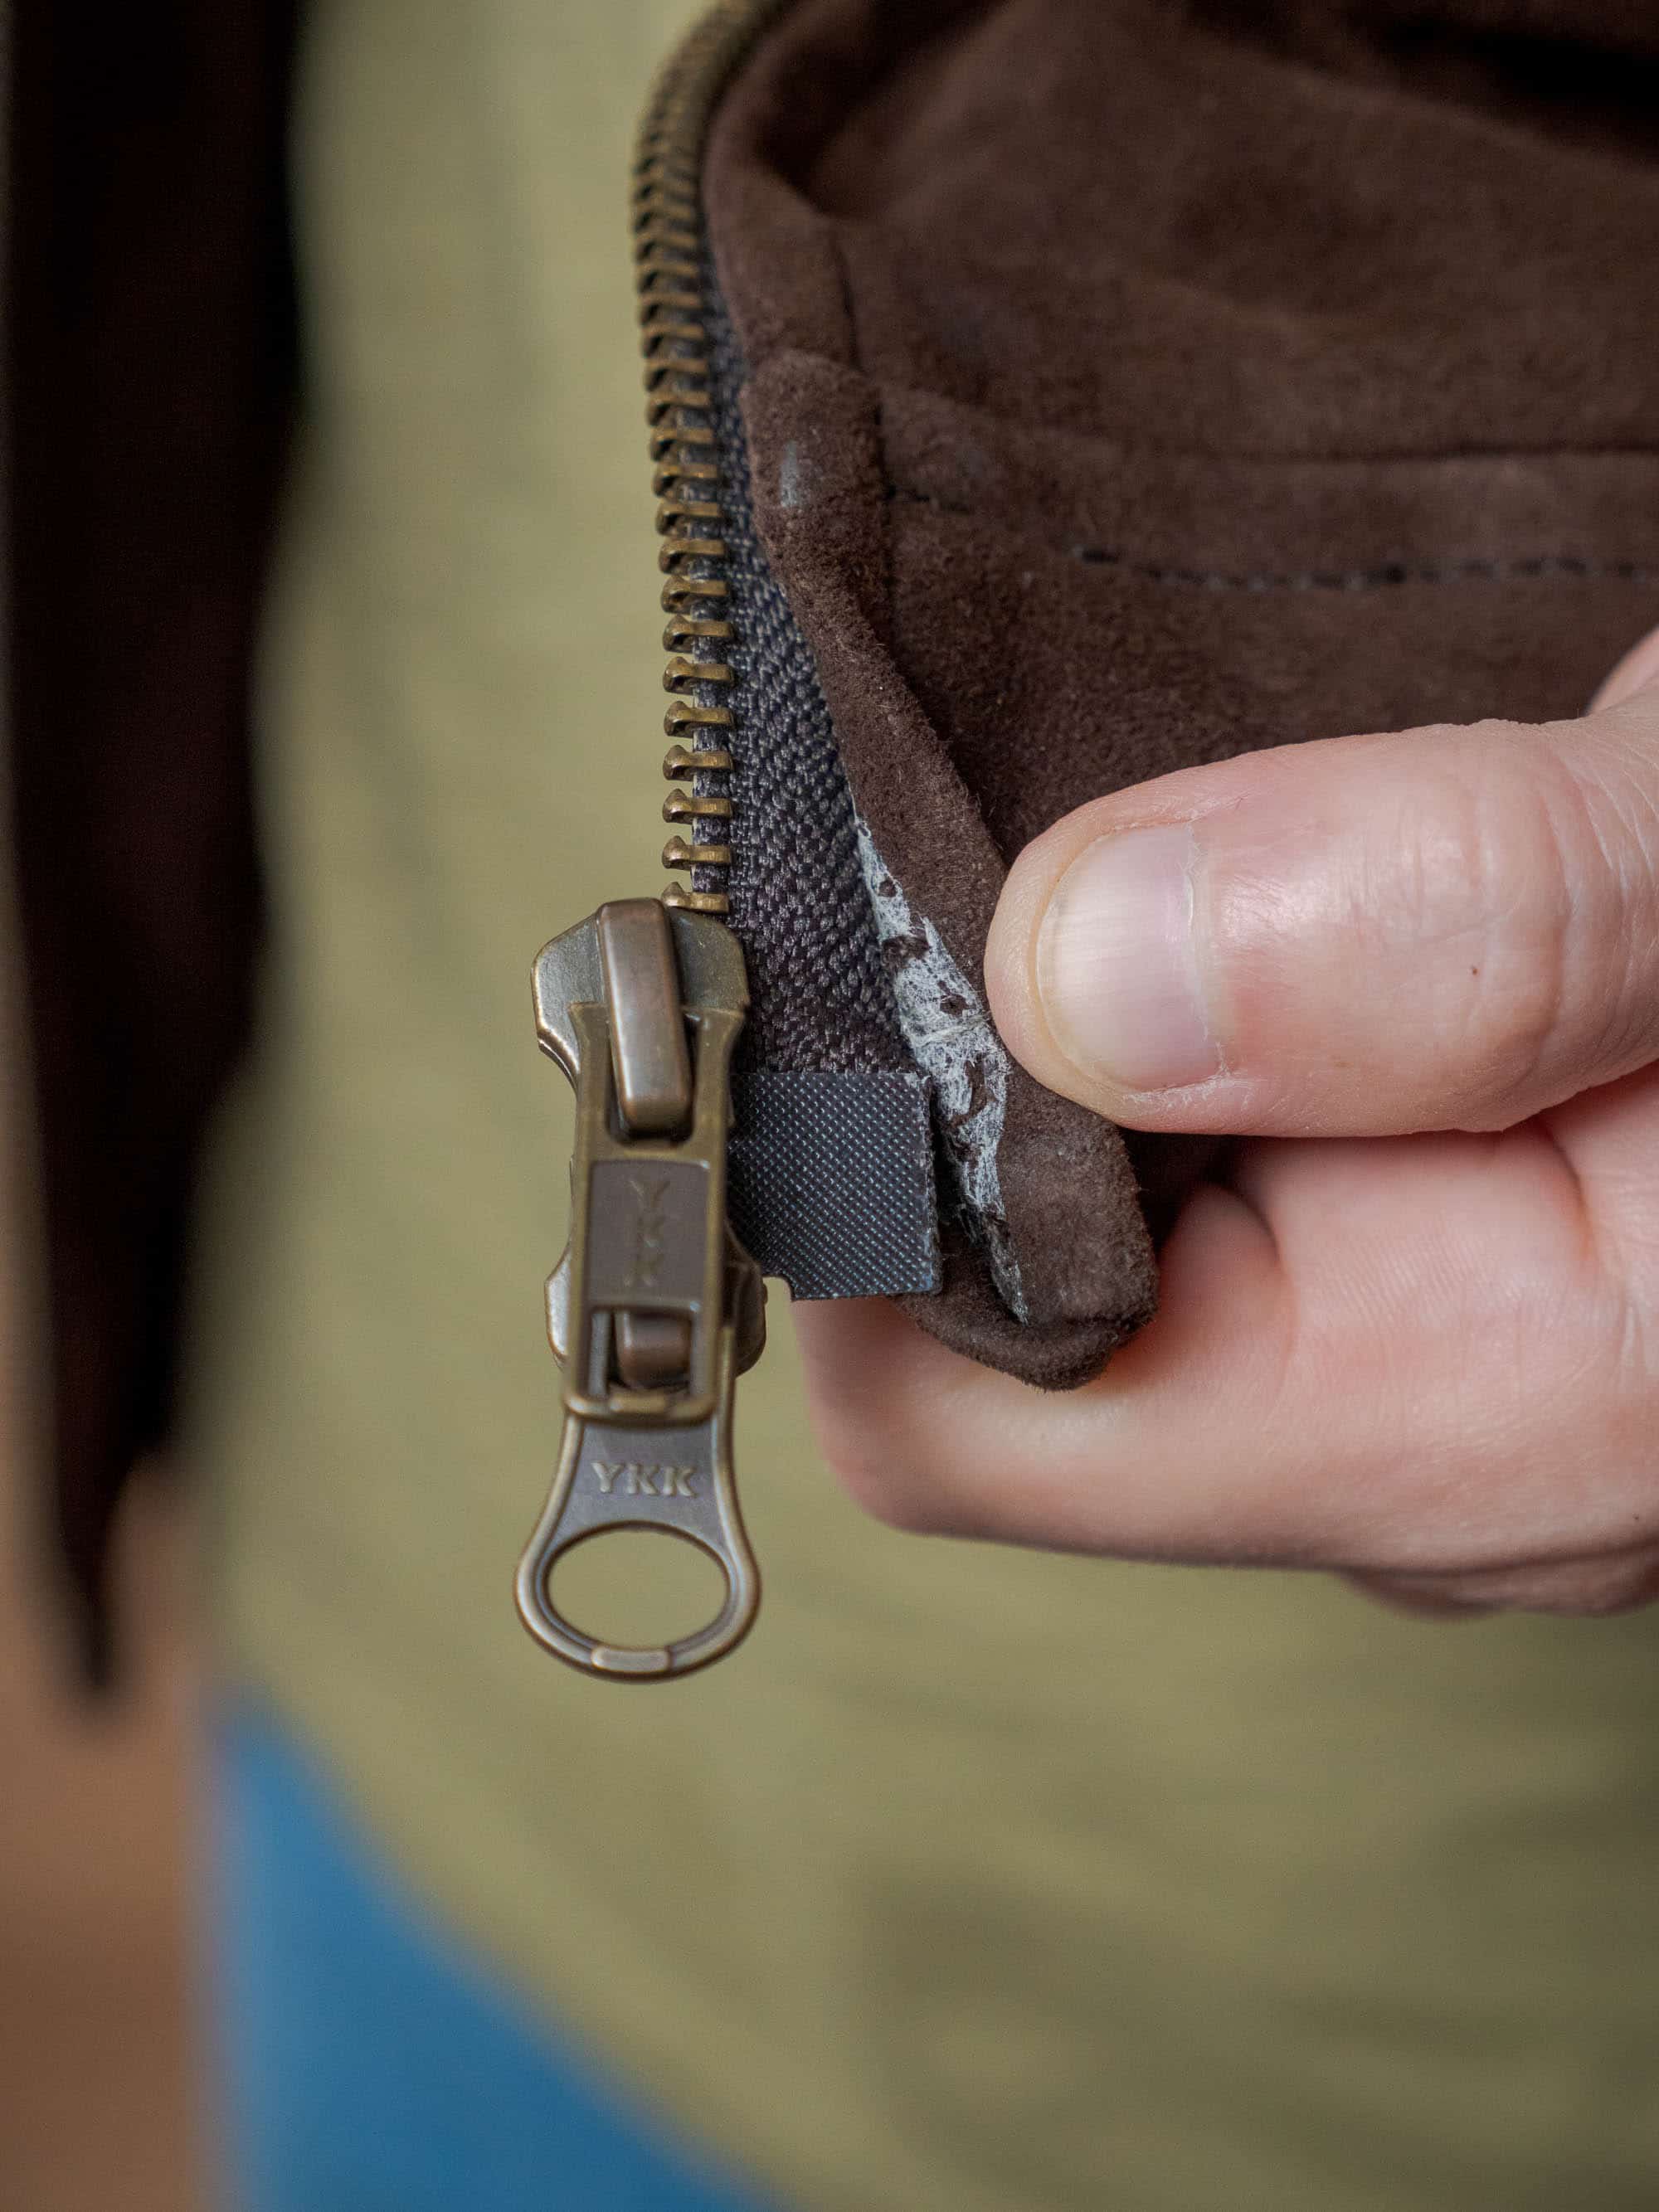 The Jacket Maker glued zipper